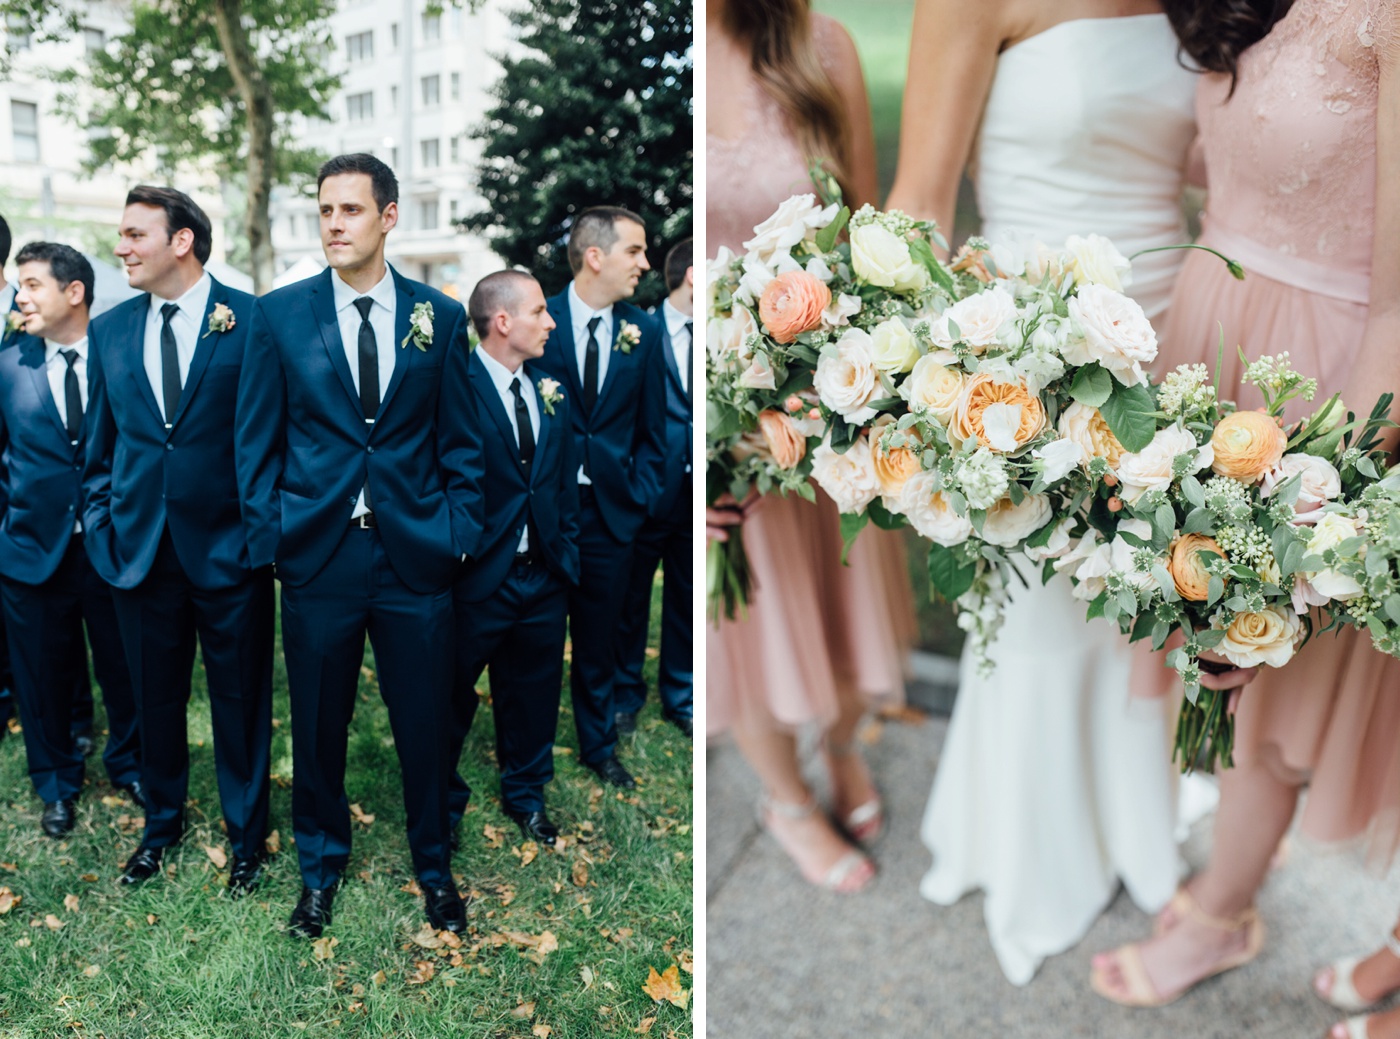 Jessica + Chuck - Rittenhouse Square Wedding Party - Philadelphia Wedding Photographer - Alison Dunn Photography photo